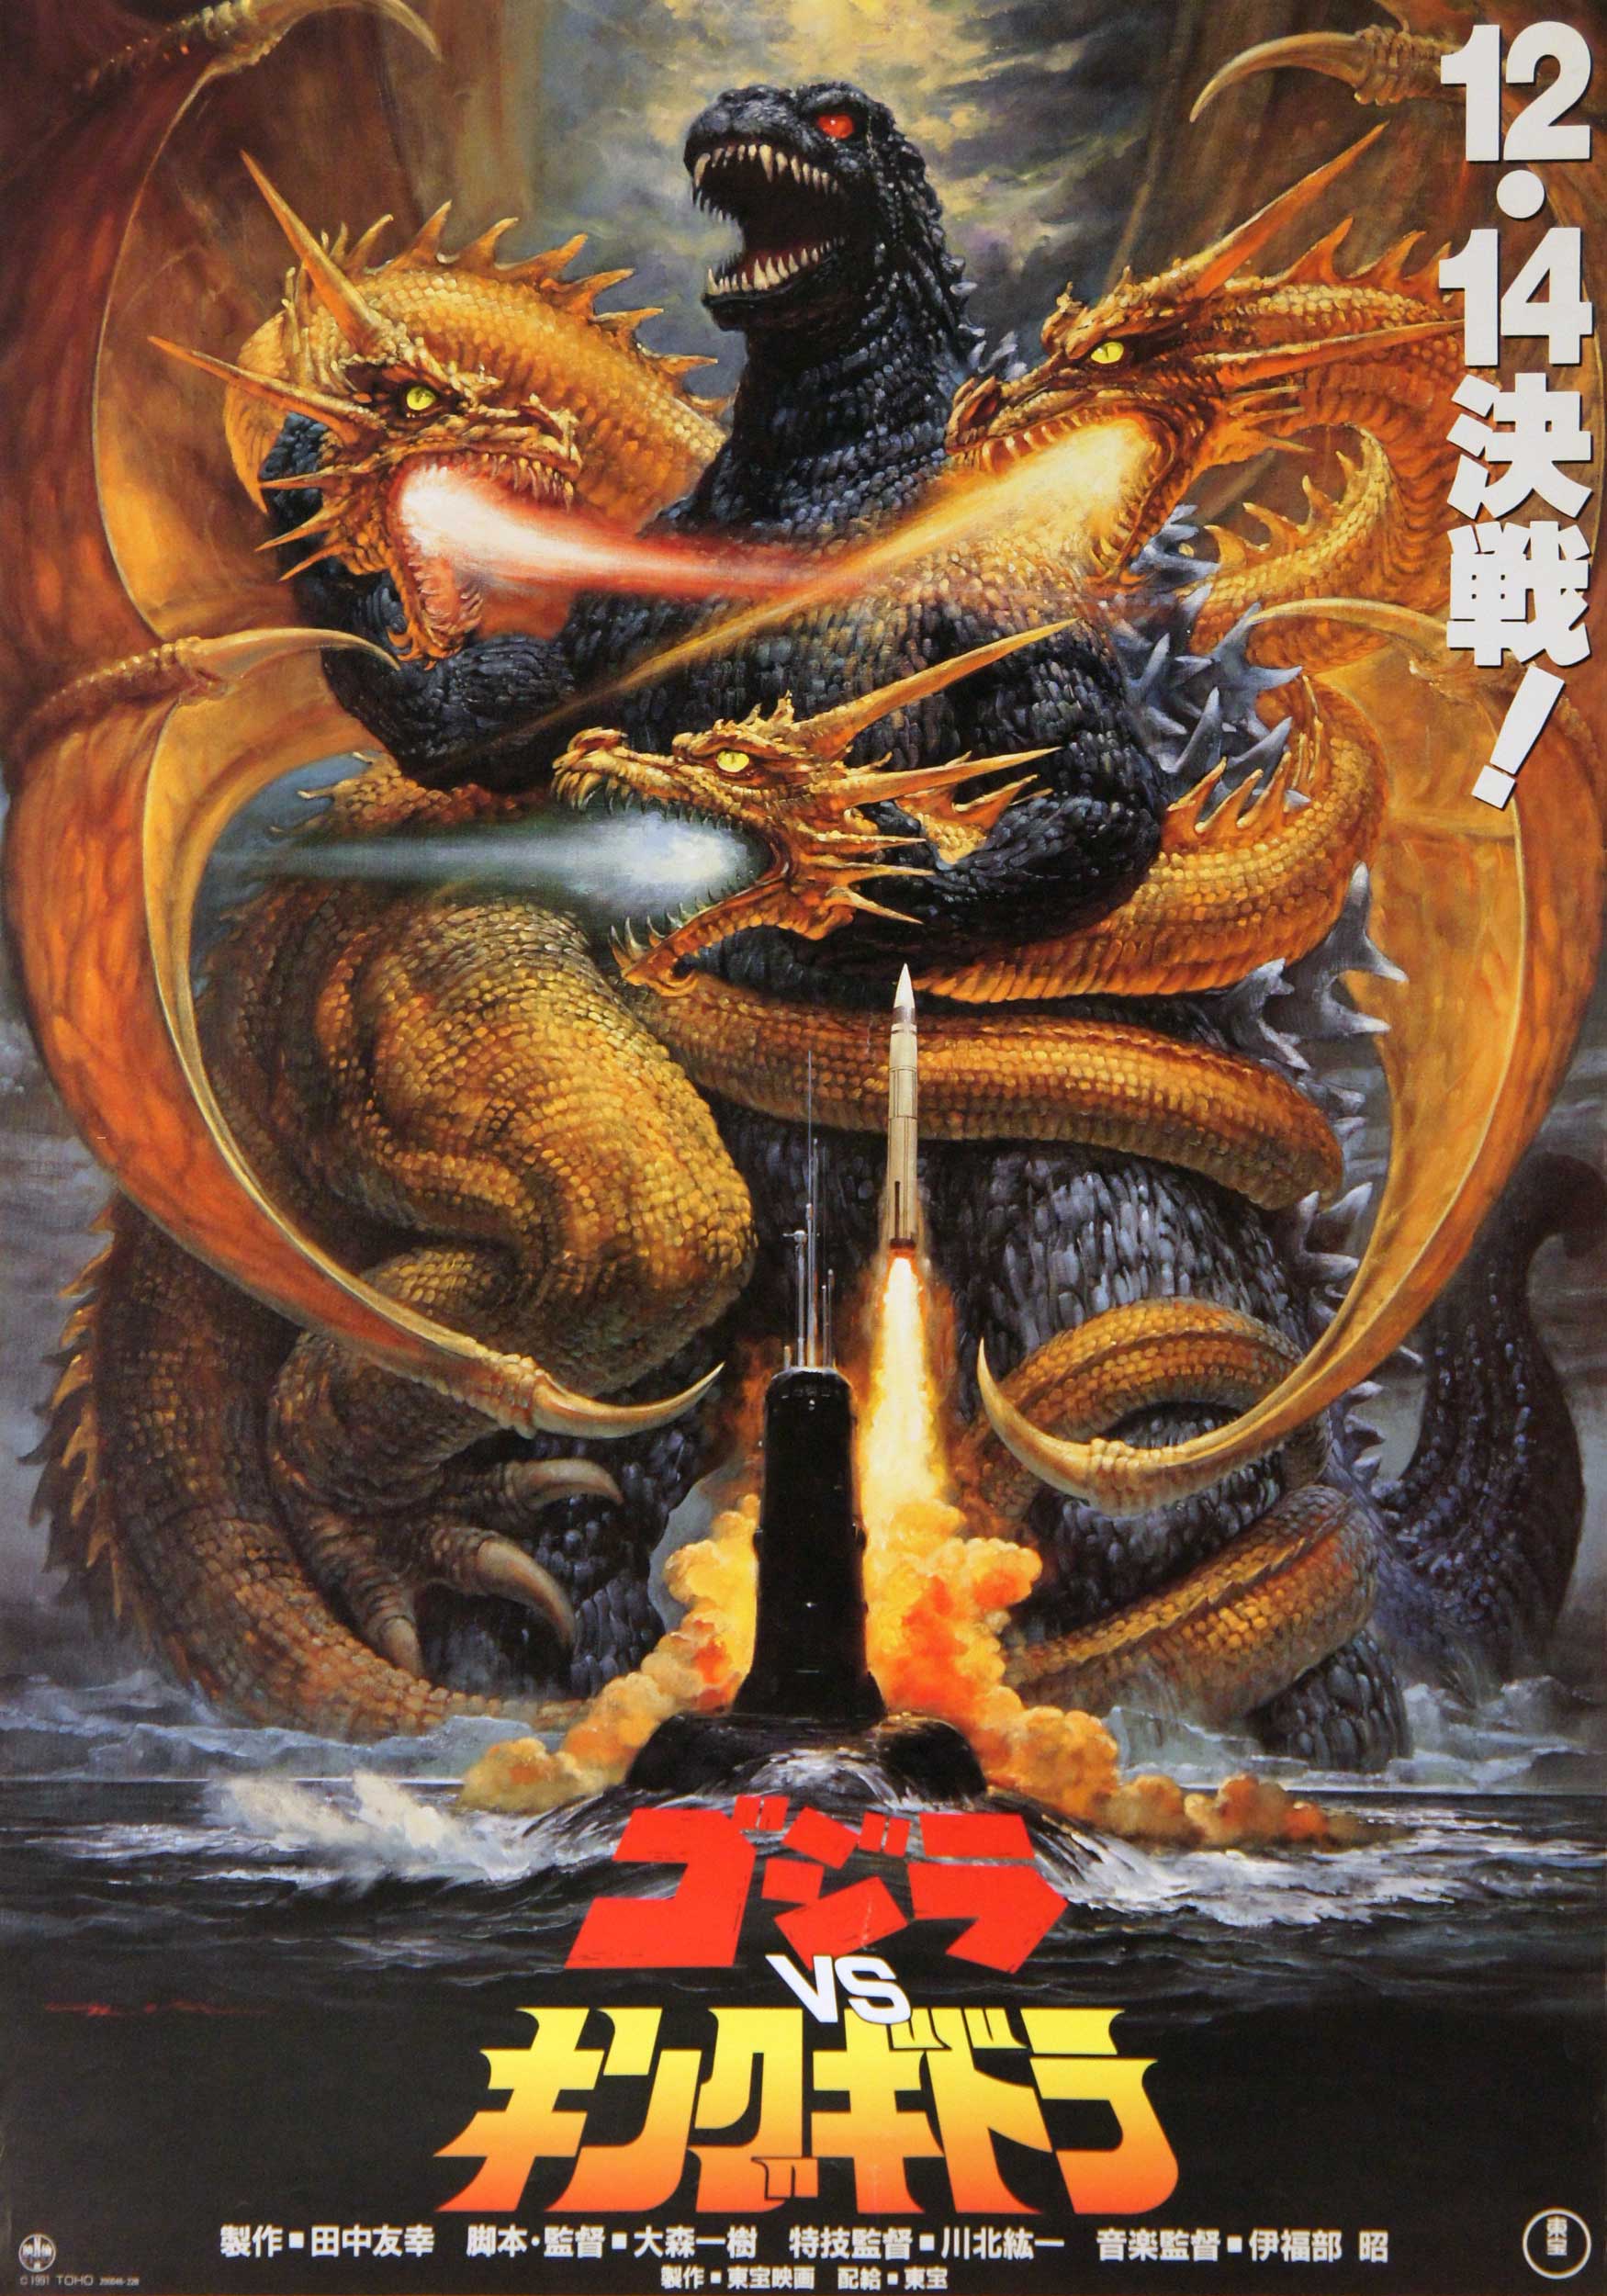 Godzilla Vs. The Thing #7